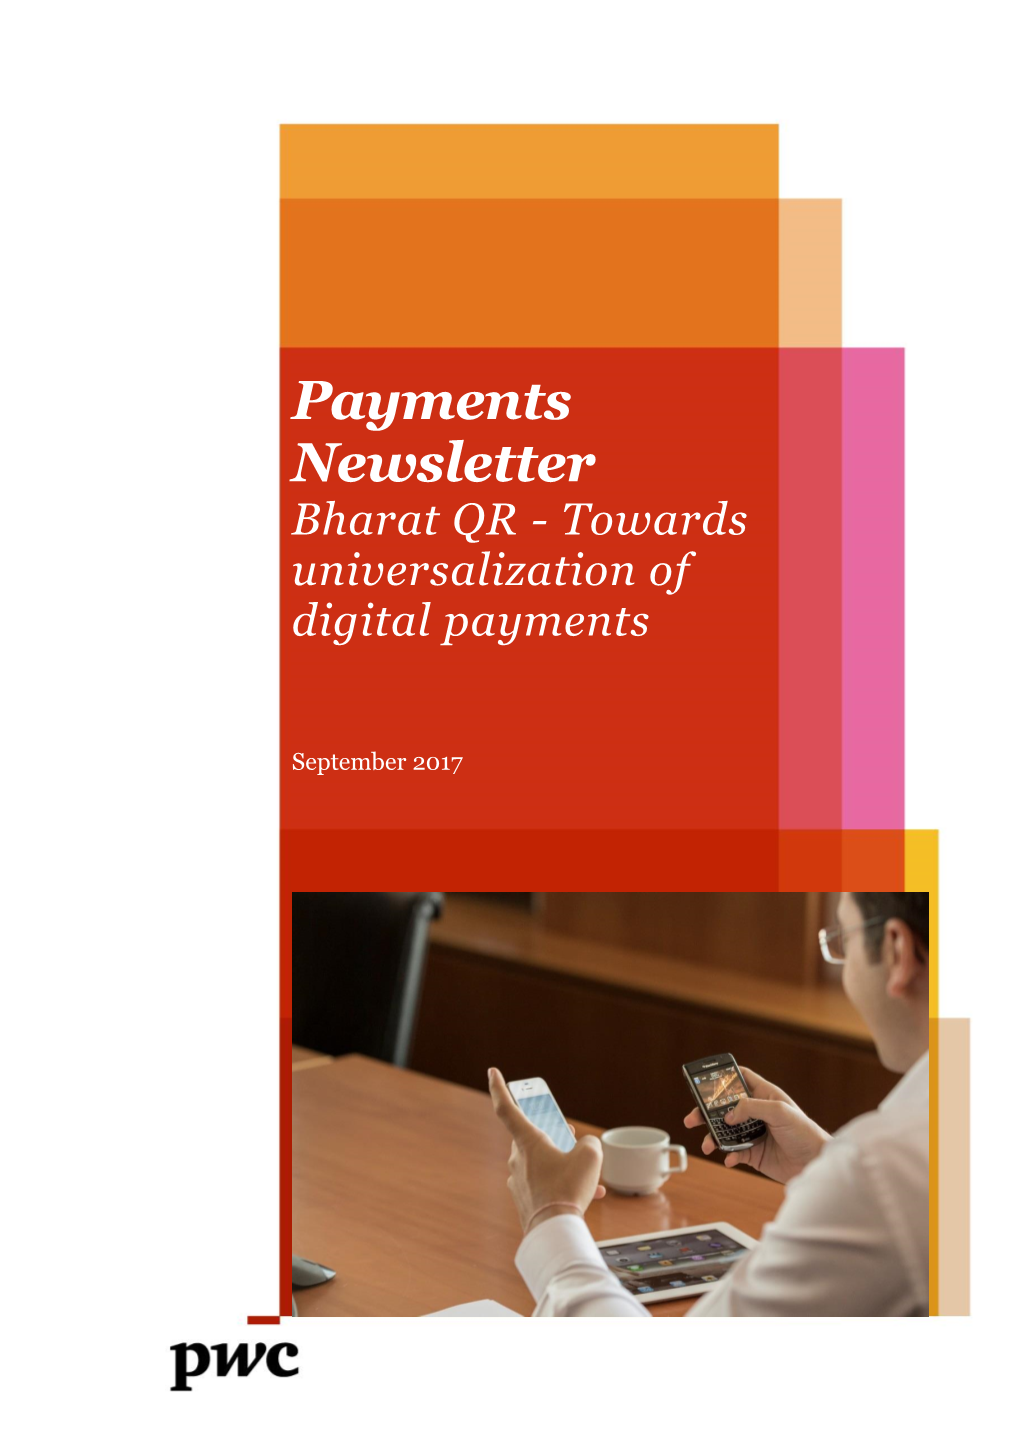 Bharat QR - Towards Universalization of Digital Payments